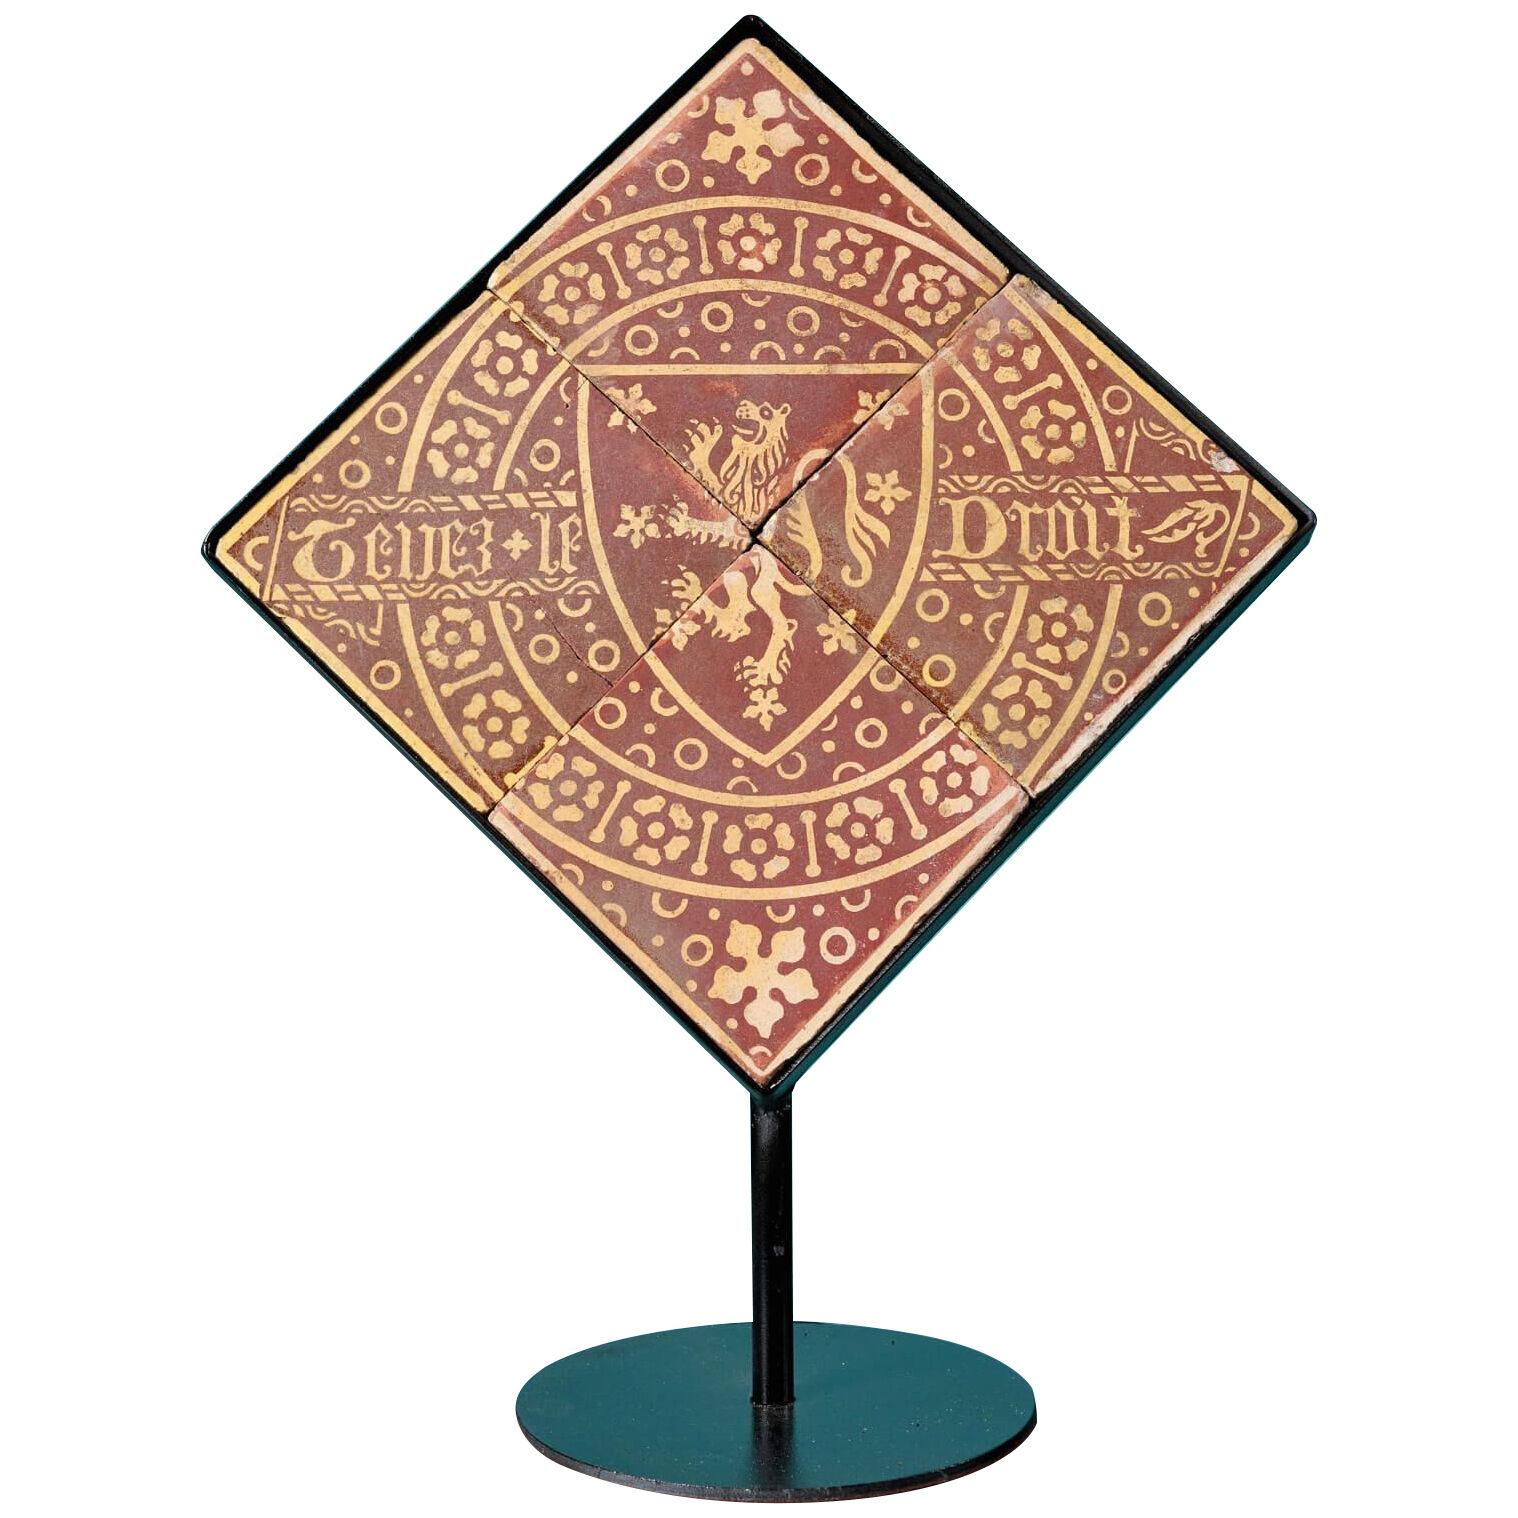 English Antique Heraldic Tiles with French Inscription ‘Tenez le Droit’